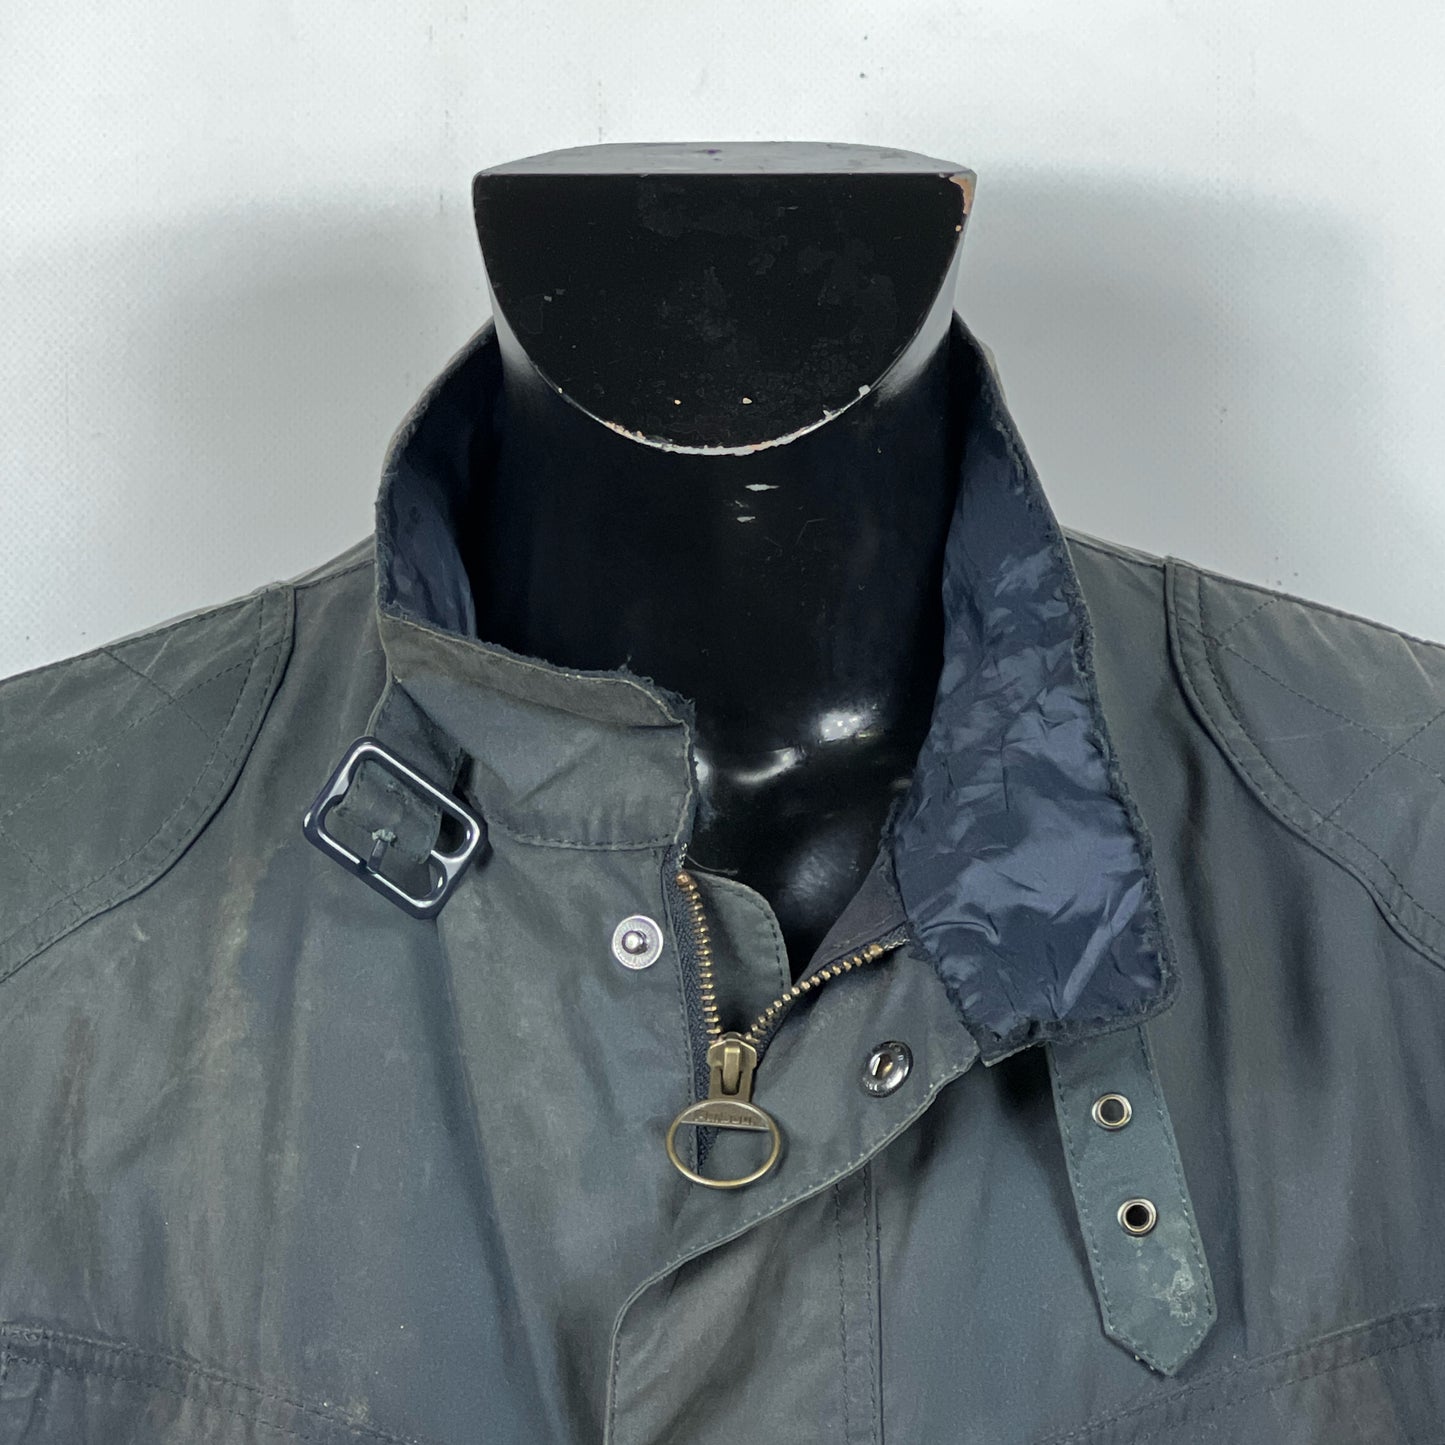 Giacca Barbour International blu XLarge Man Navy Simonside Union Jack Jacket XL